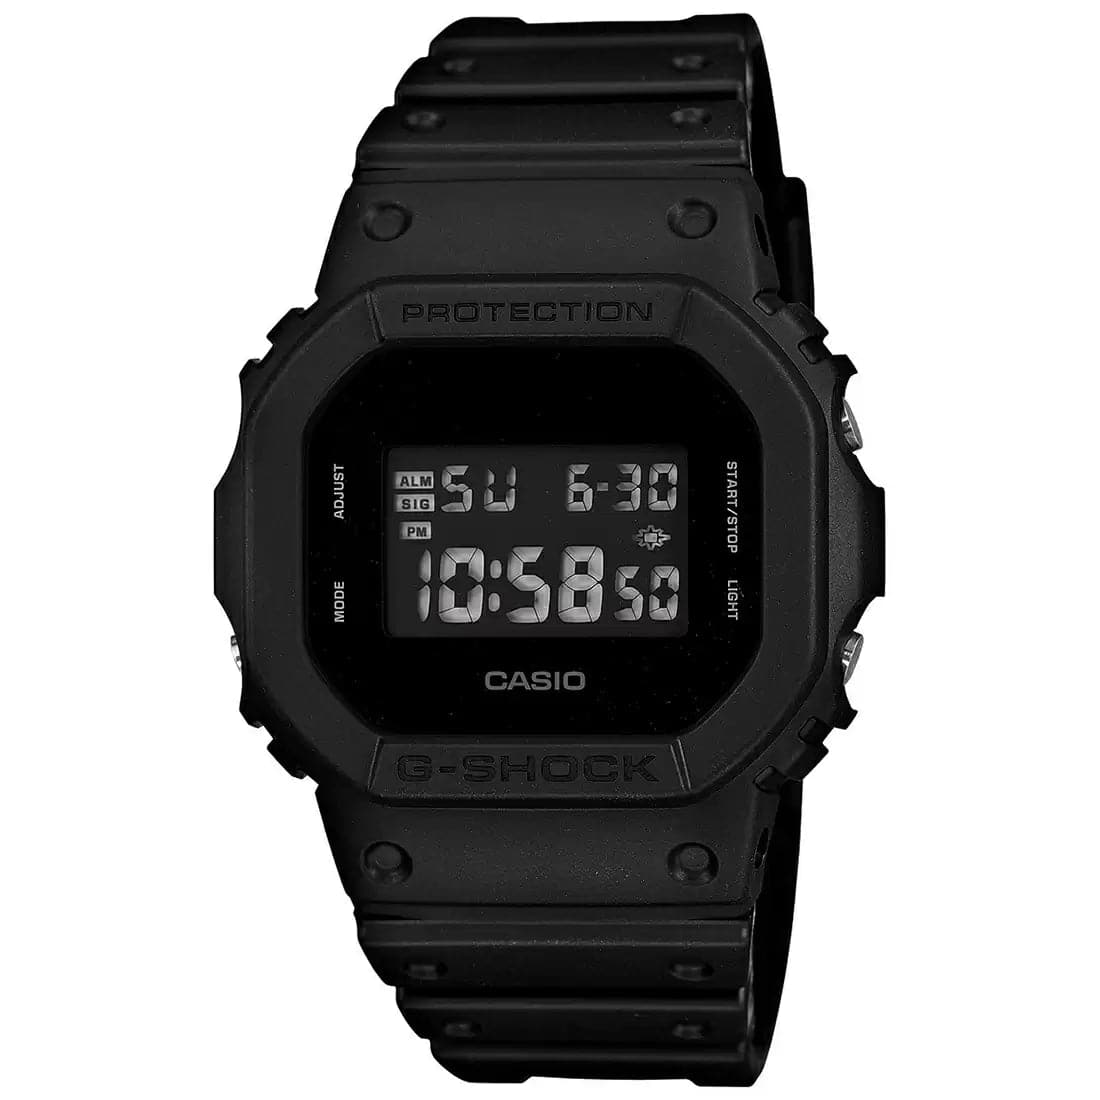 G363 DW-5600BB-1DR G-SHOCK WATCH - Kamal Watch Company